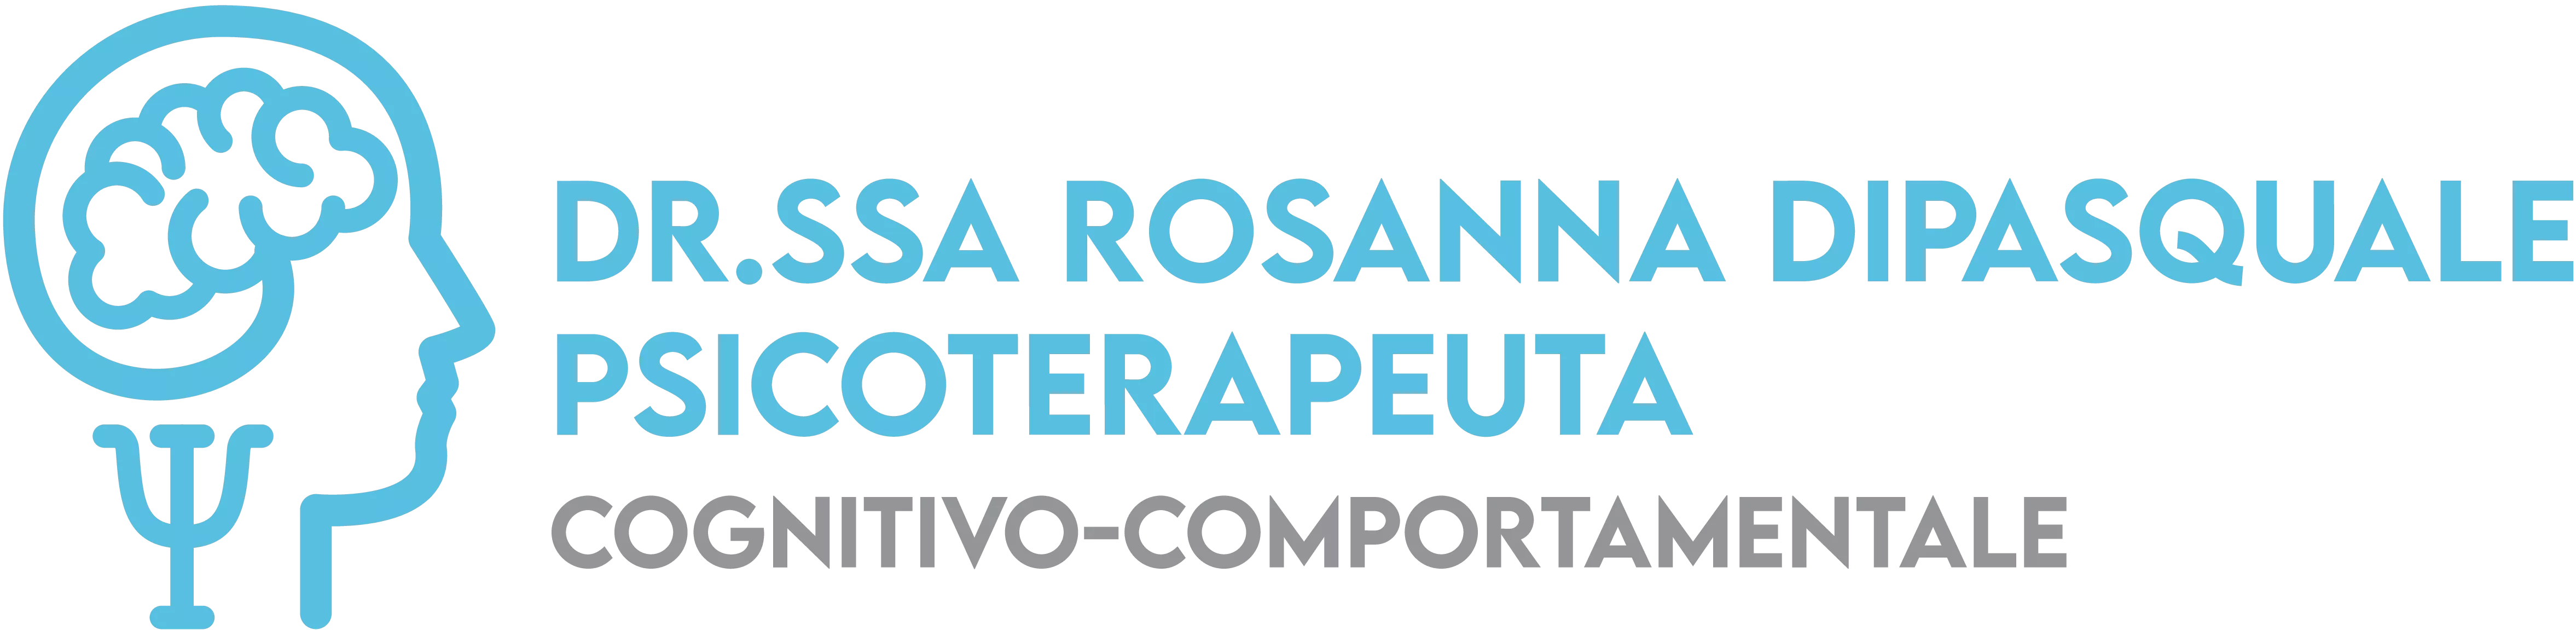 Rosanna Dipasquale Psicoterapeuta